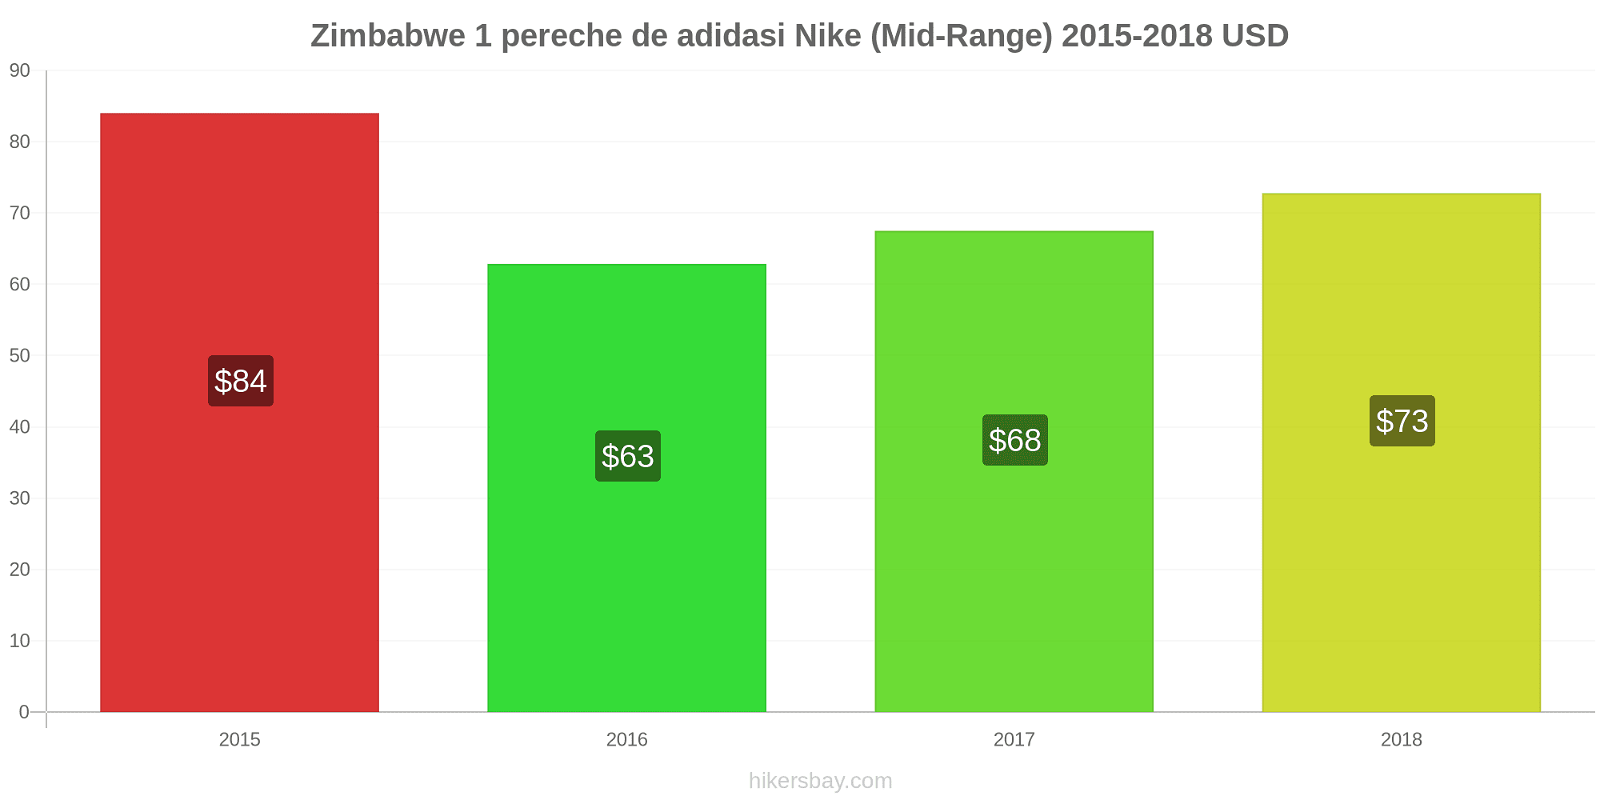 Zimbabwe modificări de preț 1 pereche de adidasi Nike (Mid-Range) hikersbay.com